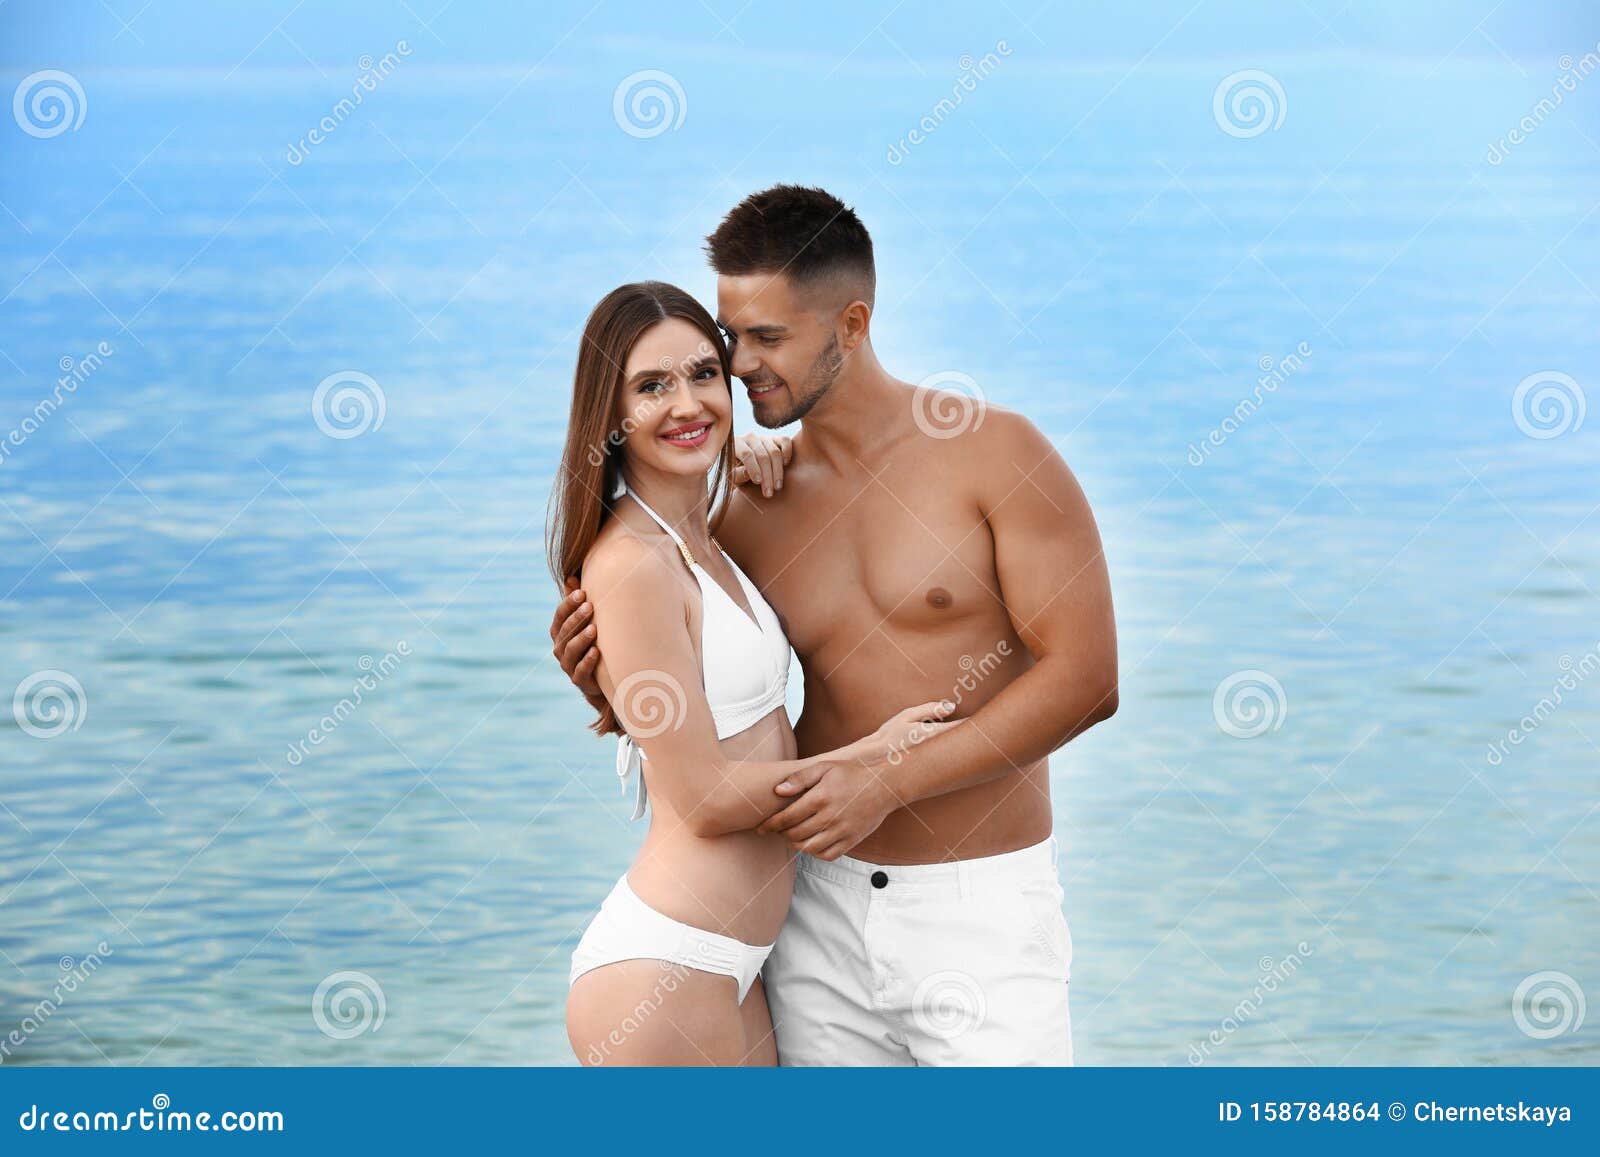 beautiful bikini fiancee honeymoon wife